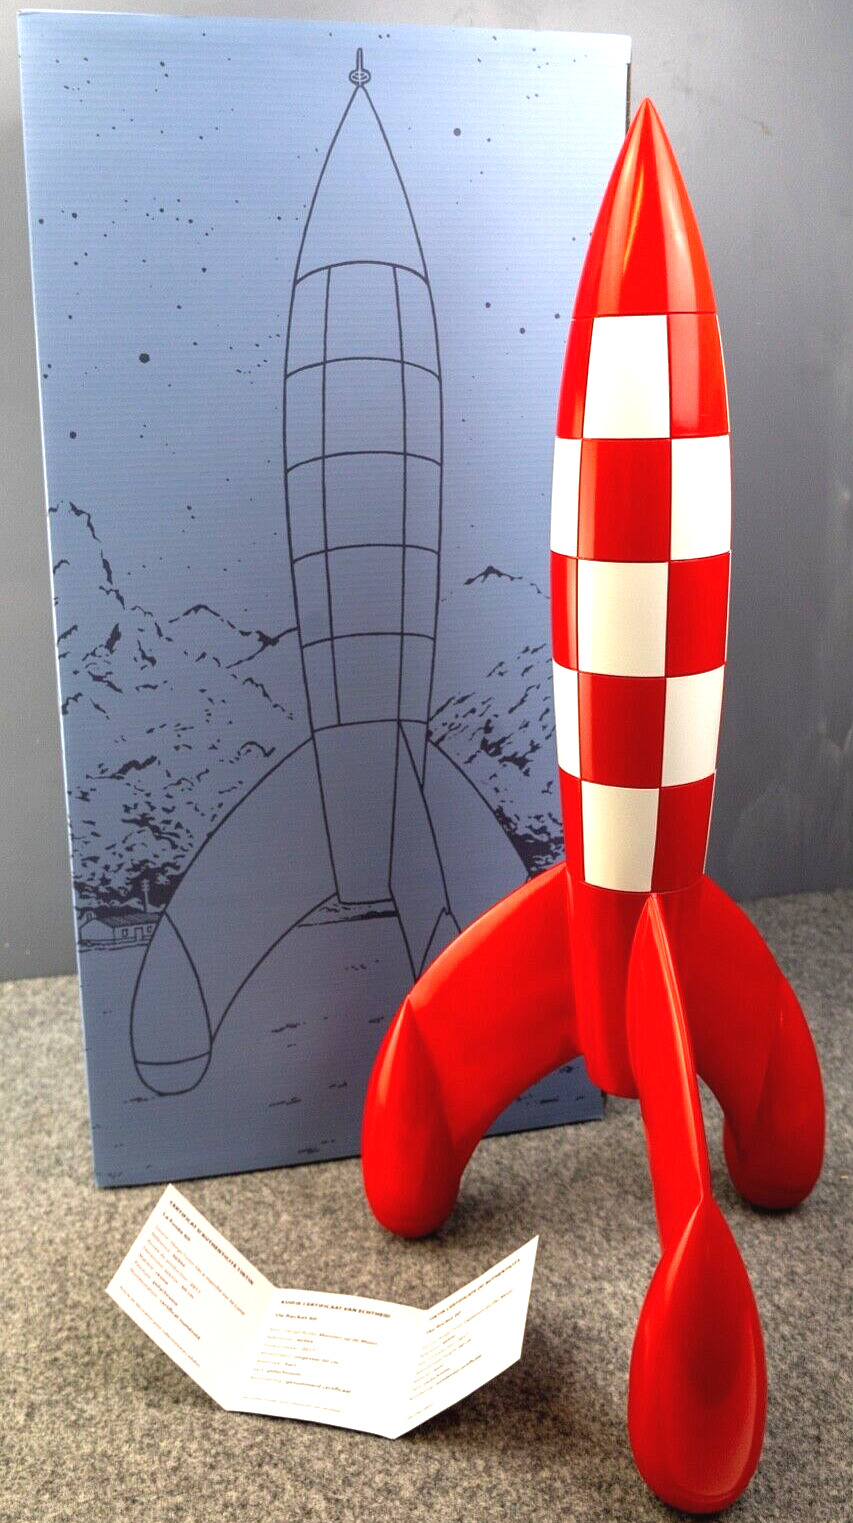 Statuette Moulinsart Tintin 46994 Moon Rocket 60cm Rare Resin Model 2017